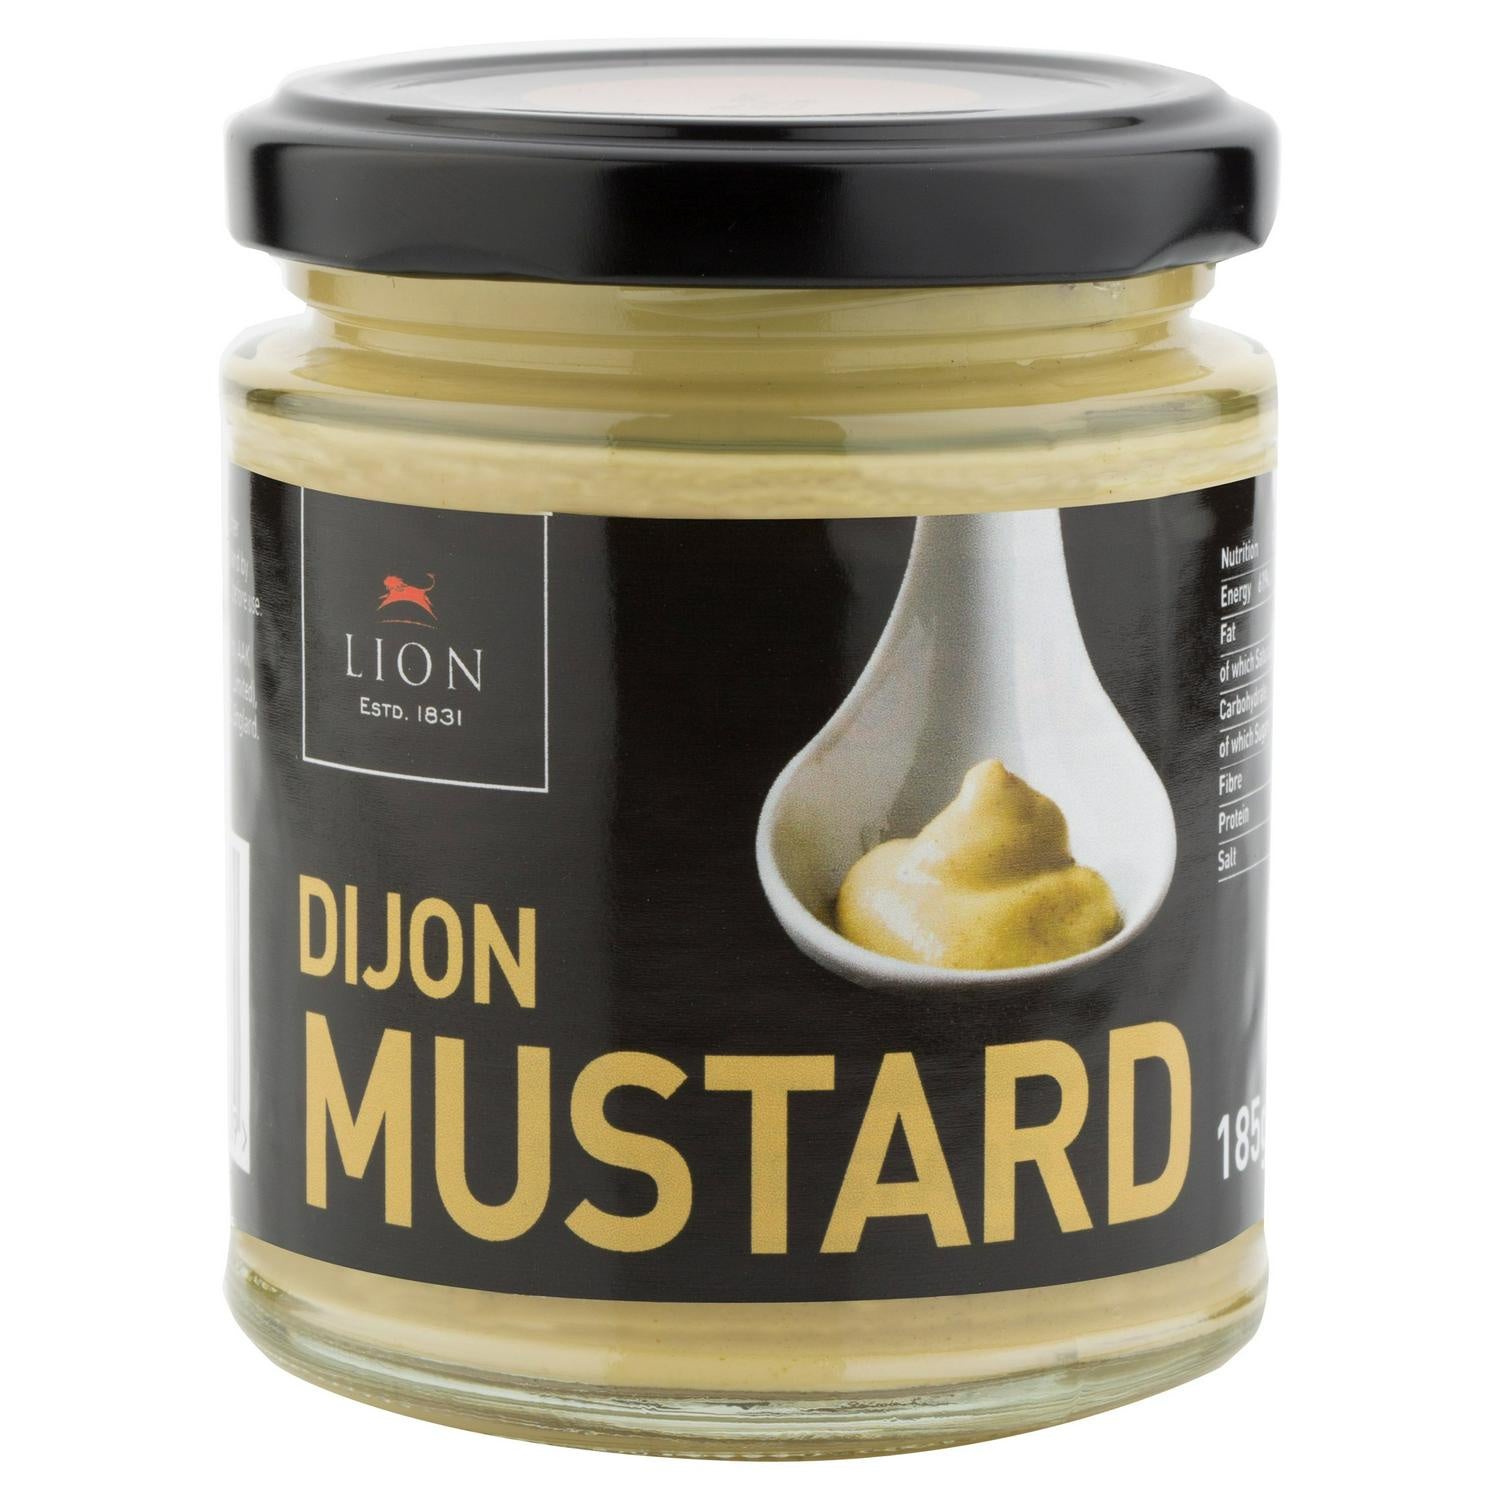 Lion Dijon Mustard (185g)